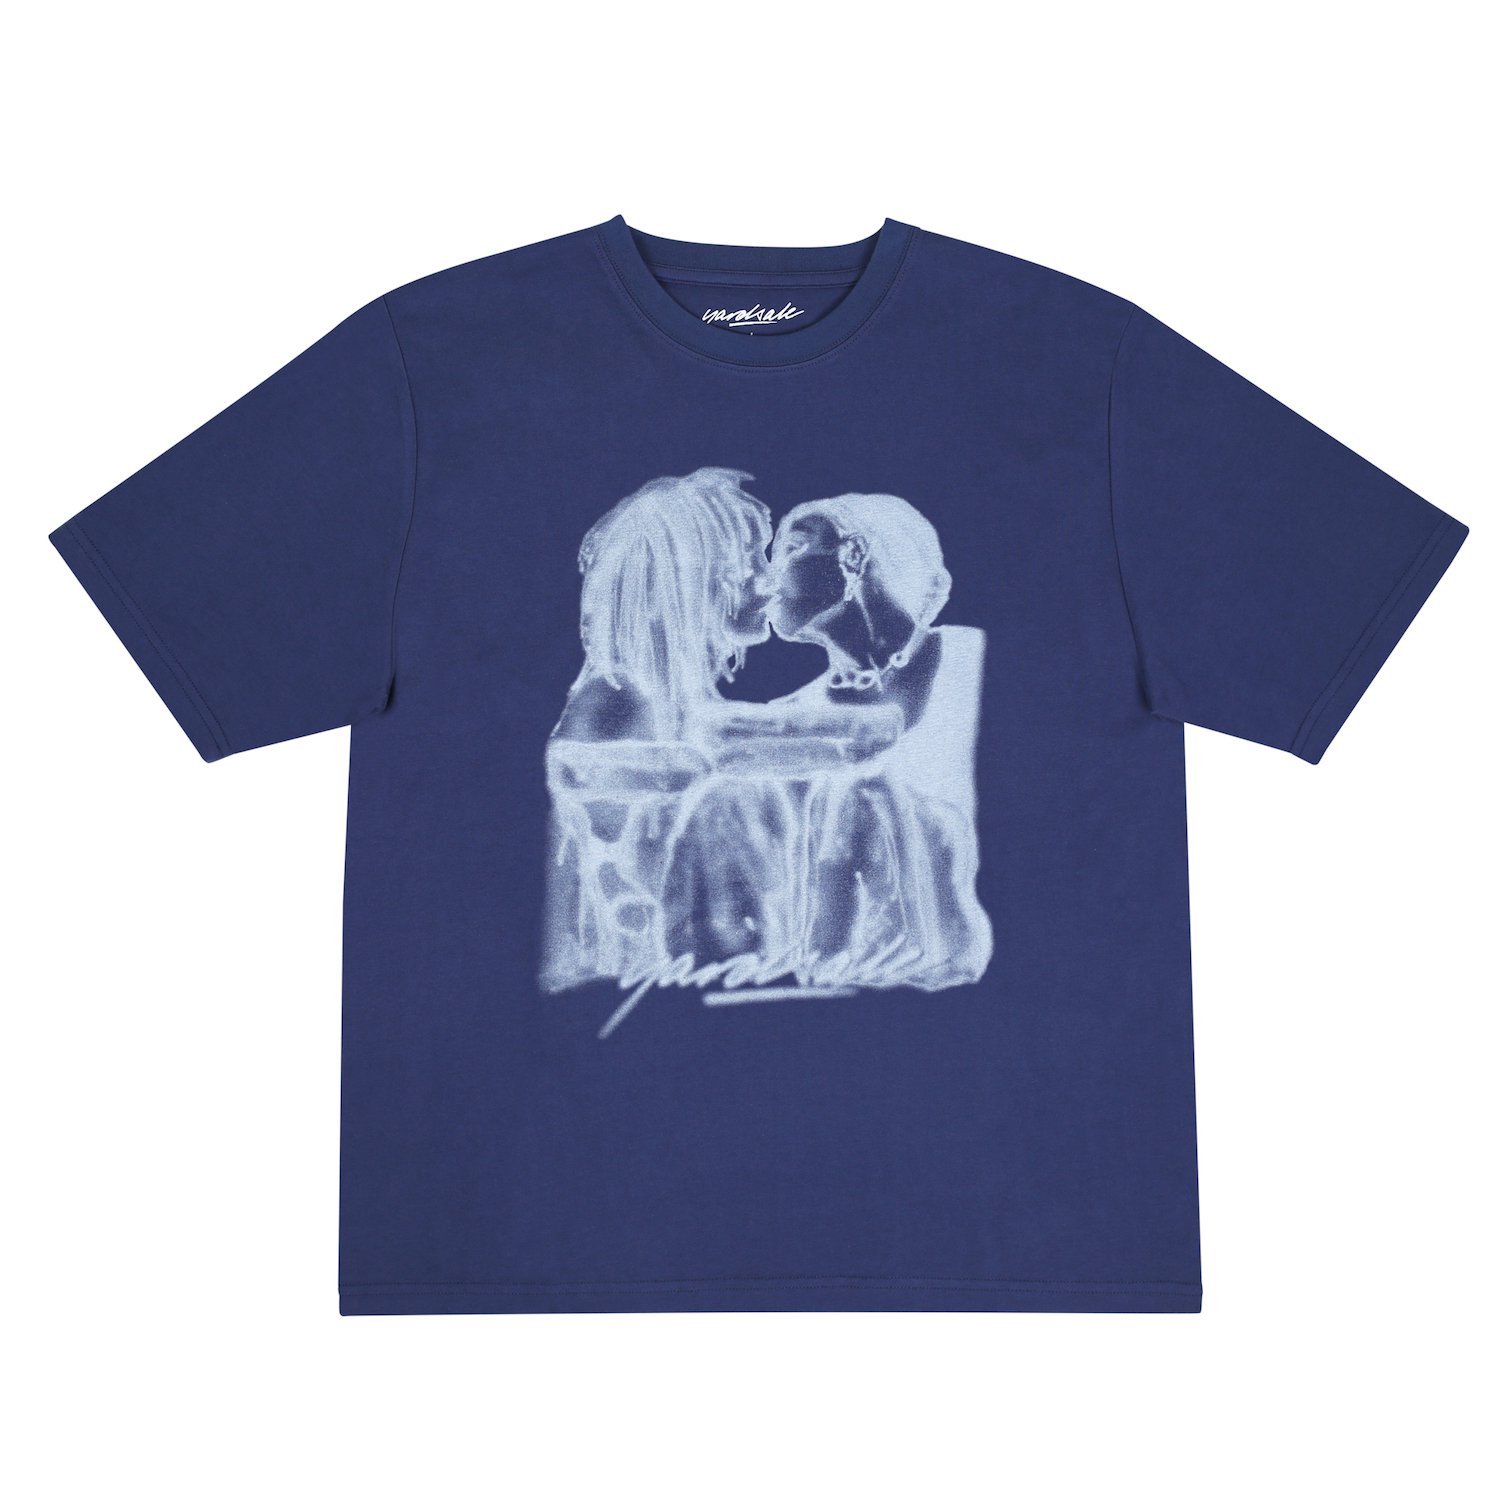 YARDSALE<br>Eclipse T-Shirt<br>